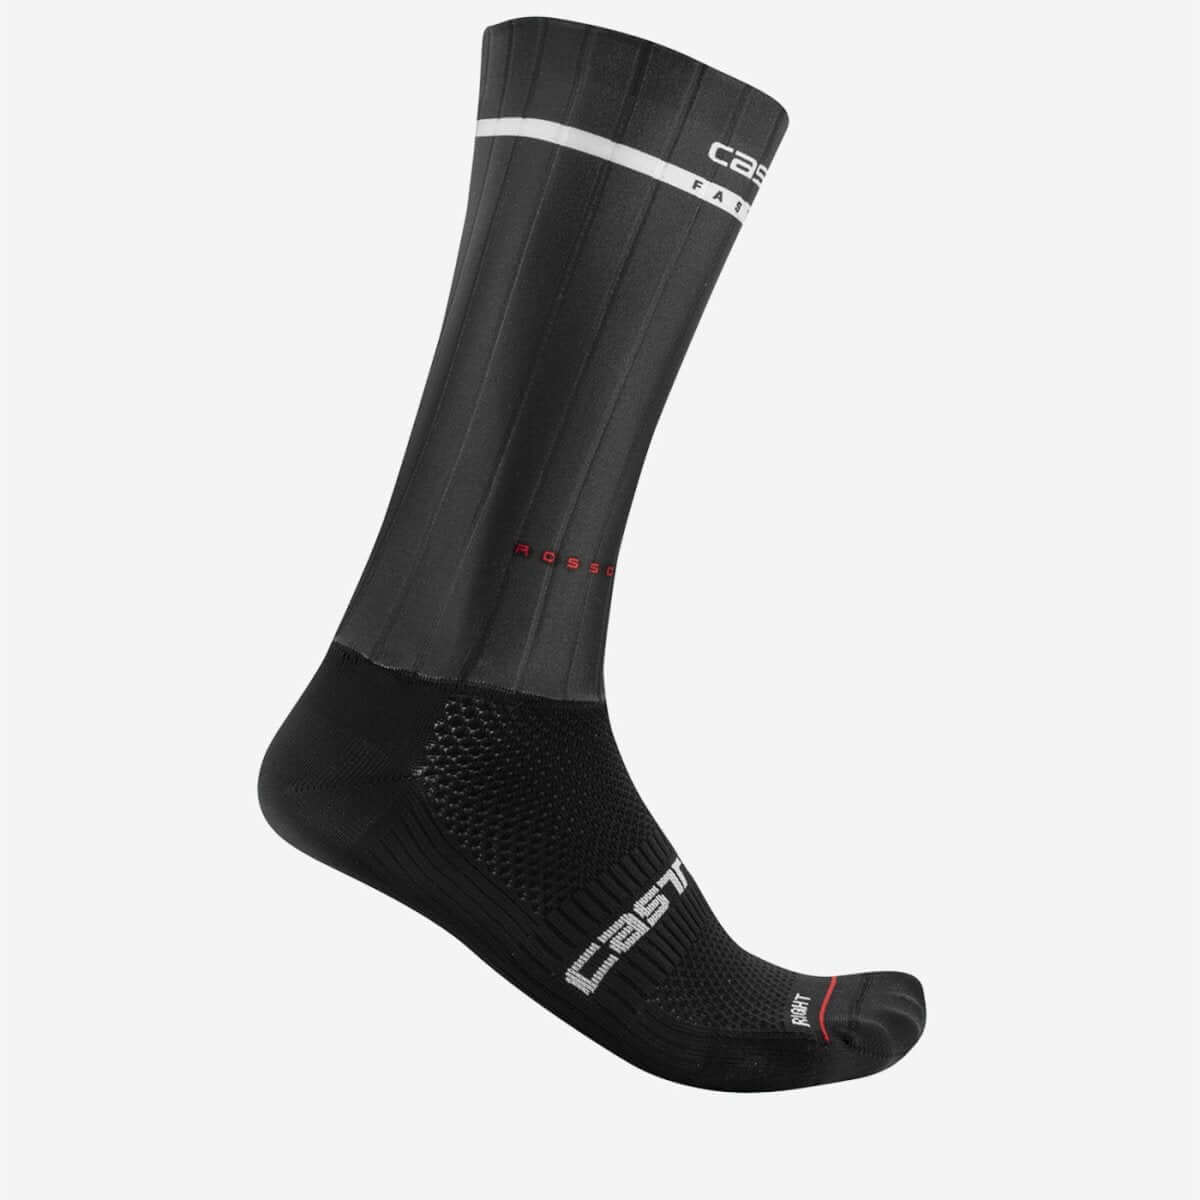 Castelli Fast Feet 2 Men's Cycling Socks (Black)